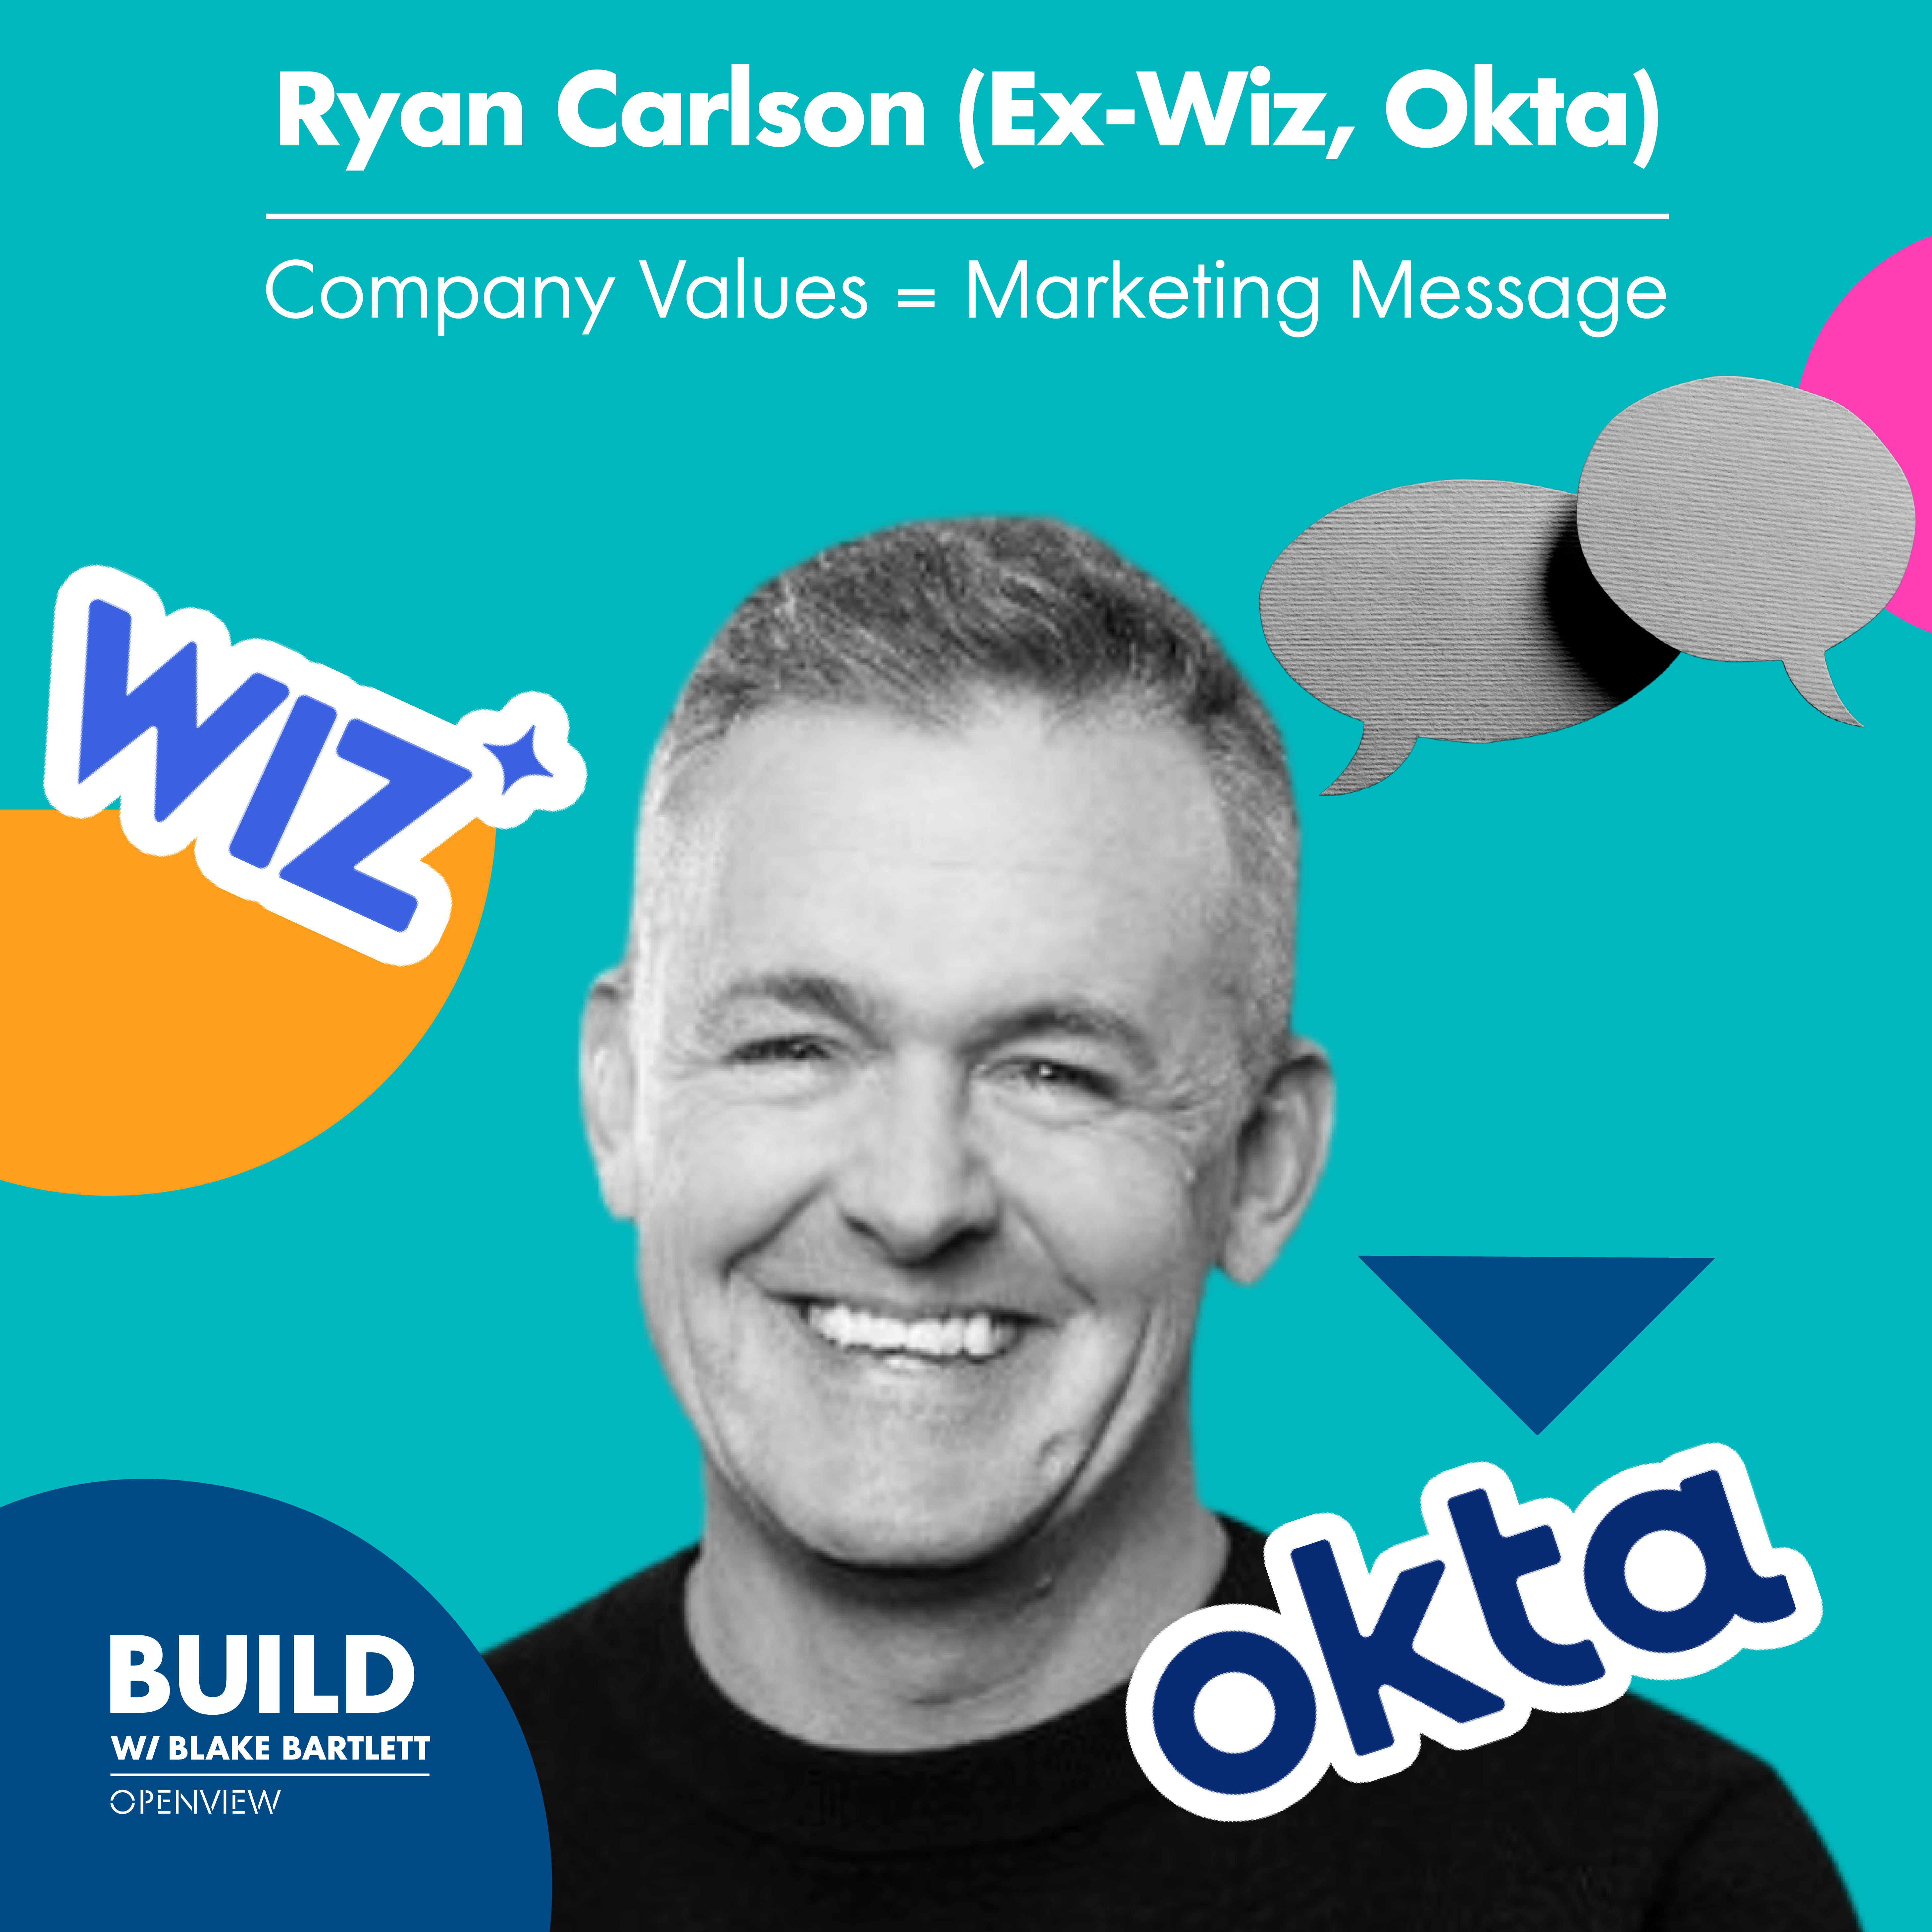 Ryan Carlson (ex-Wiz, Okta): Company Values = Marketing Message